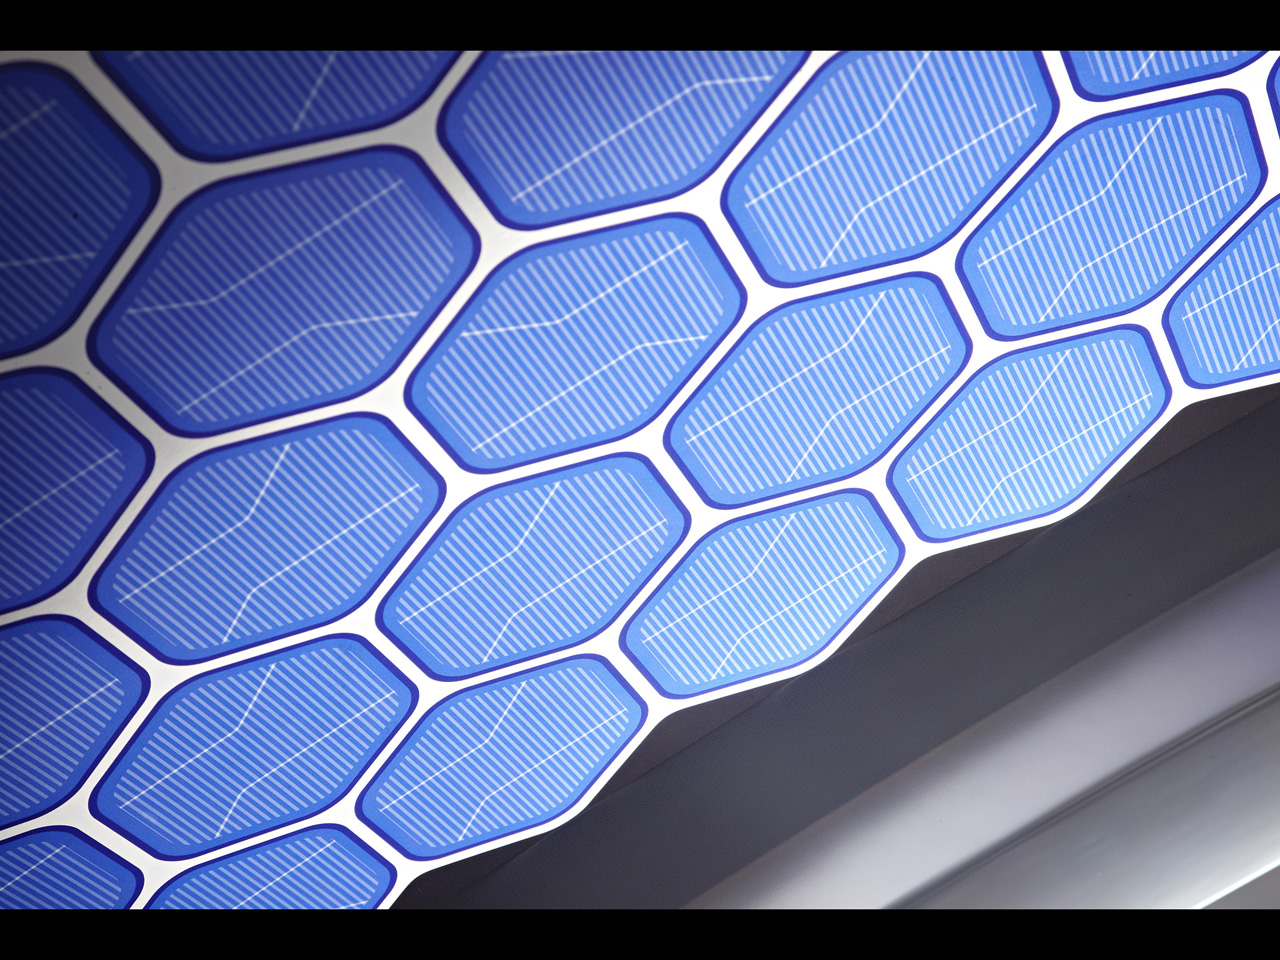  Land Rover DC100 Concept   Roof Solar Panels   1280x960   Wallpaper 1280x960